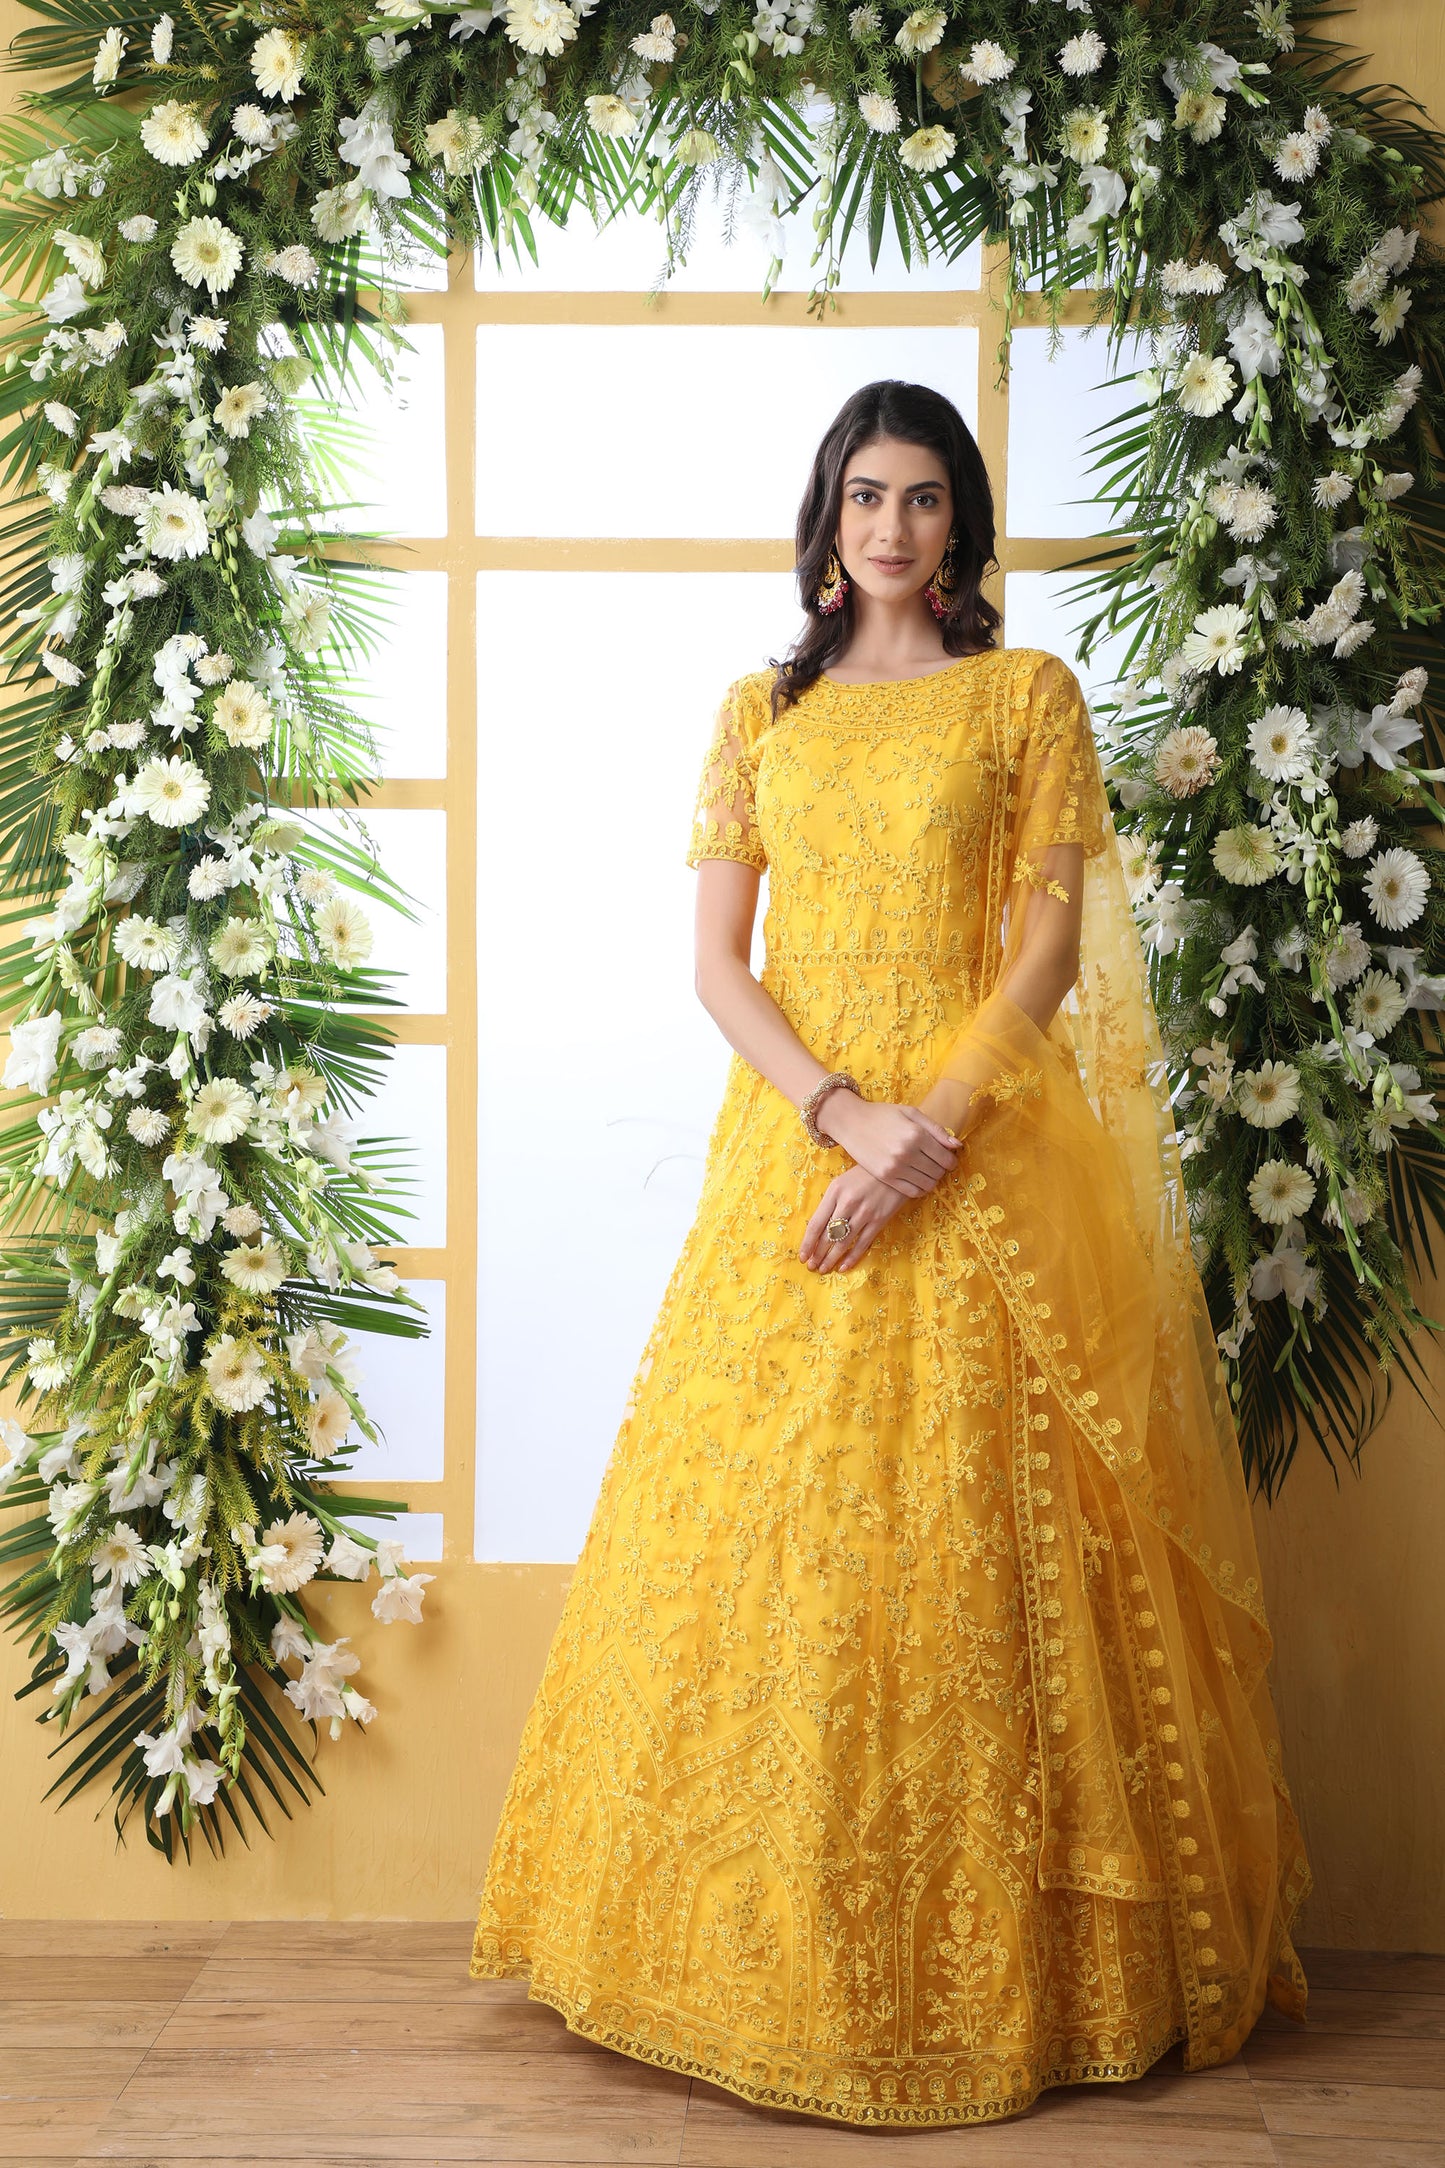 Stunning Yellow Color Net Anarkali for Haldi